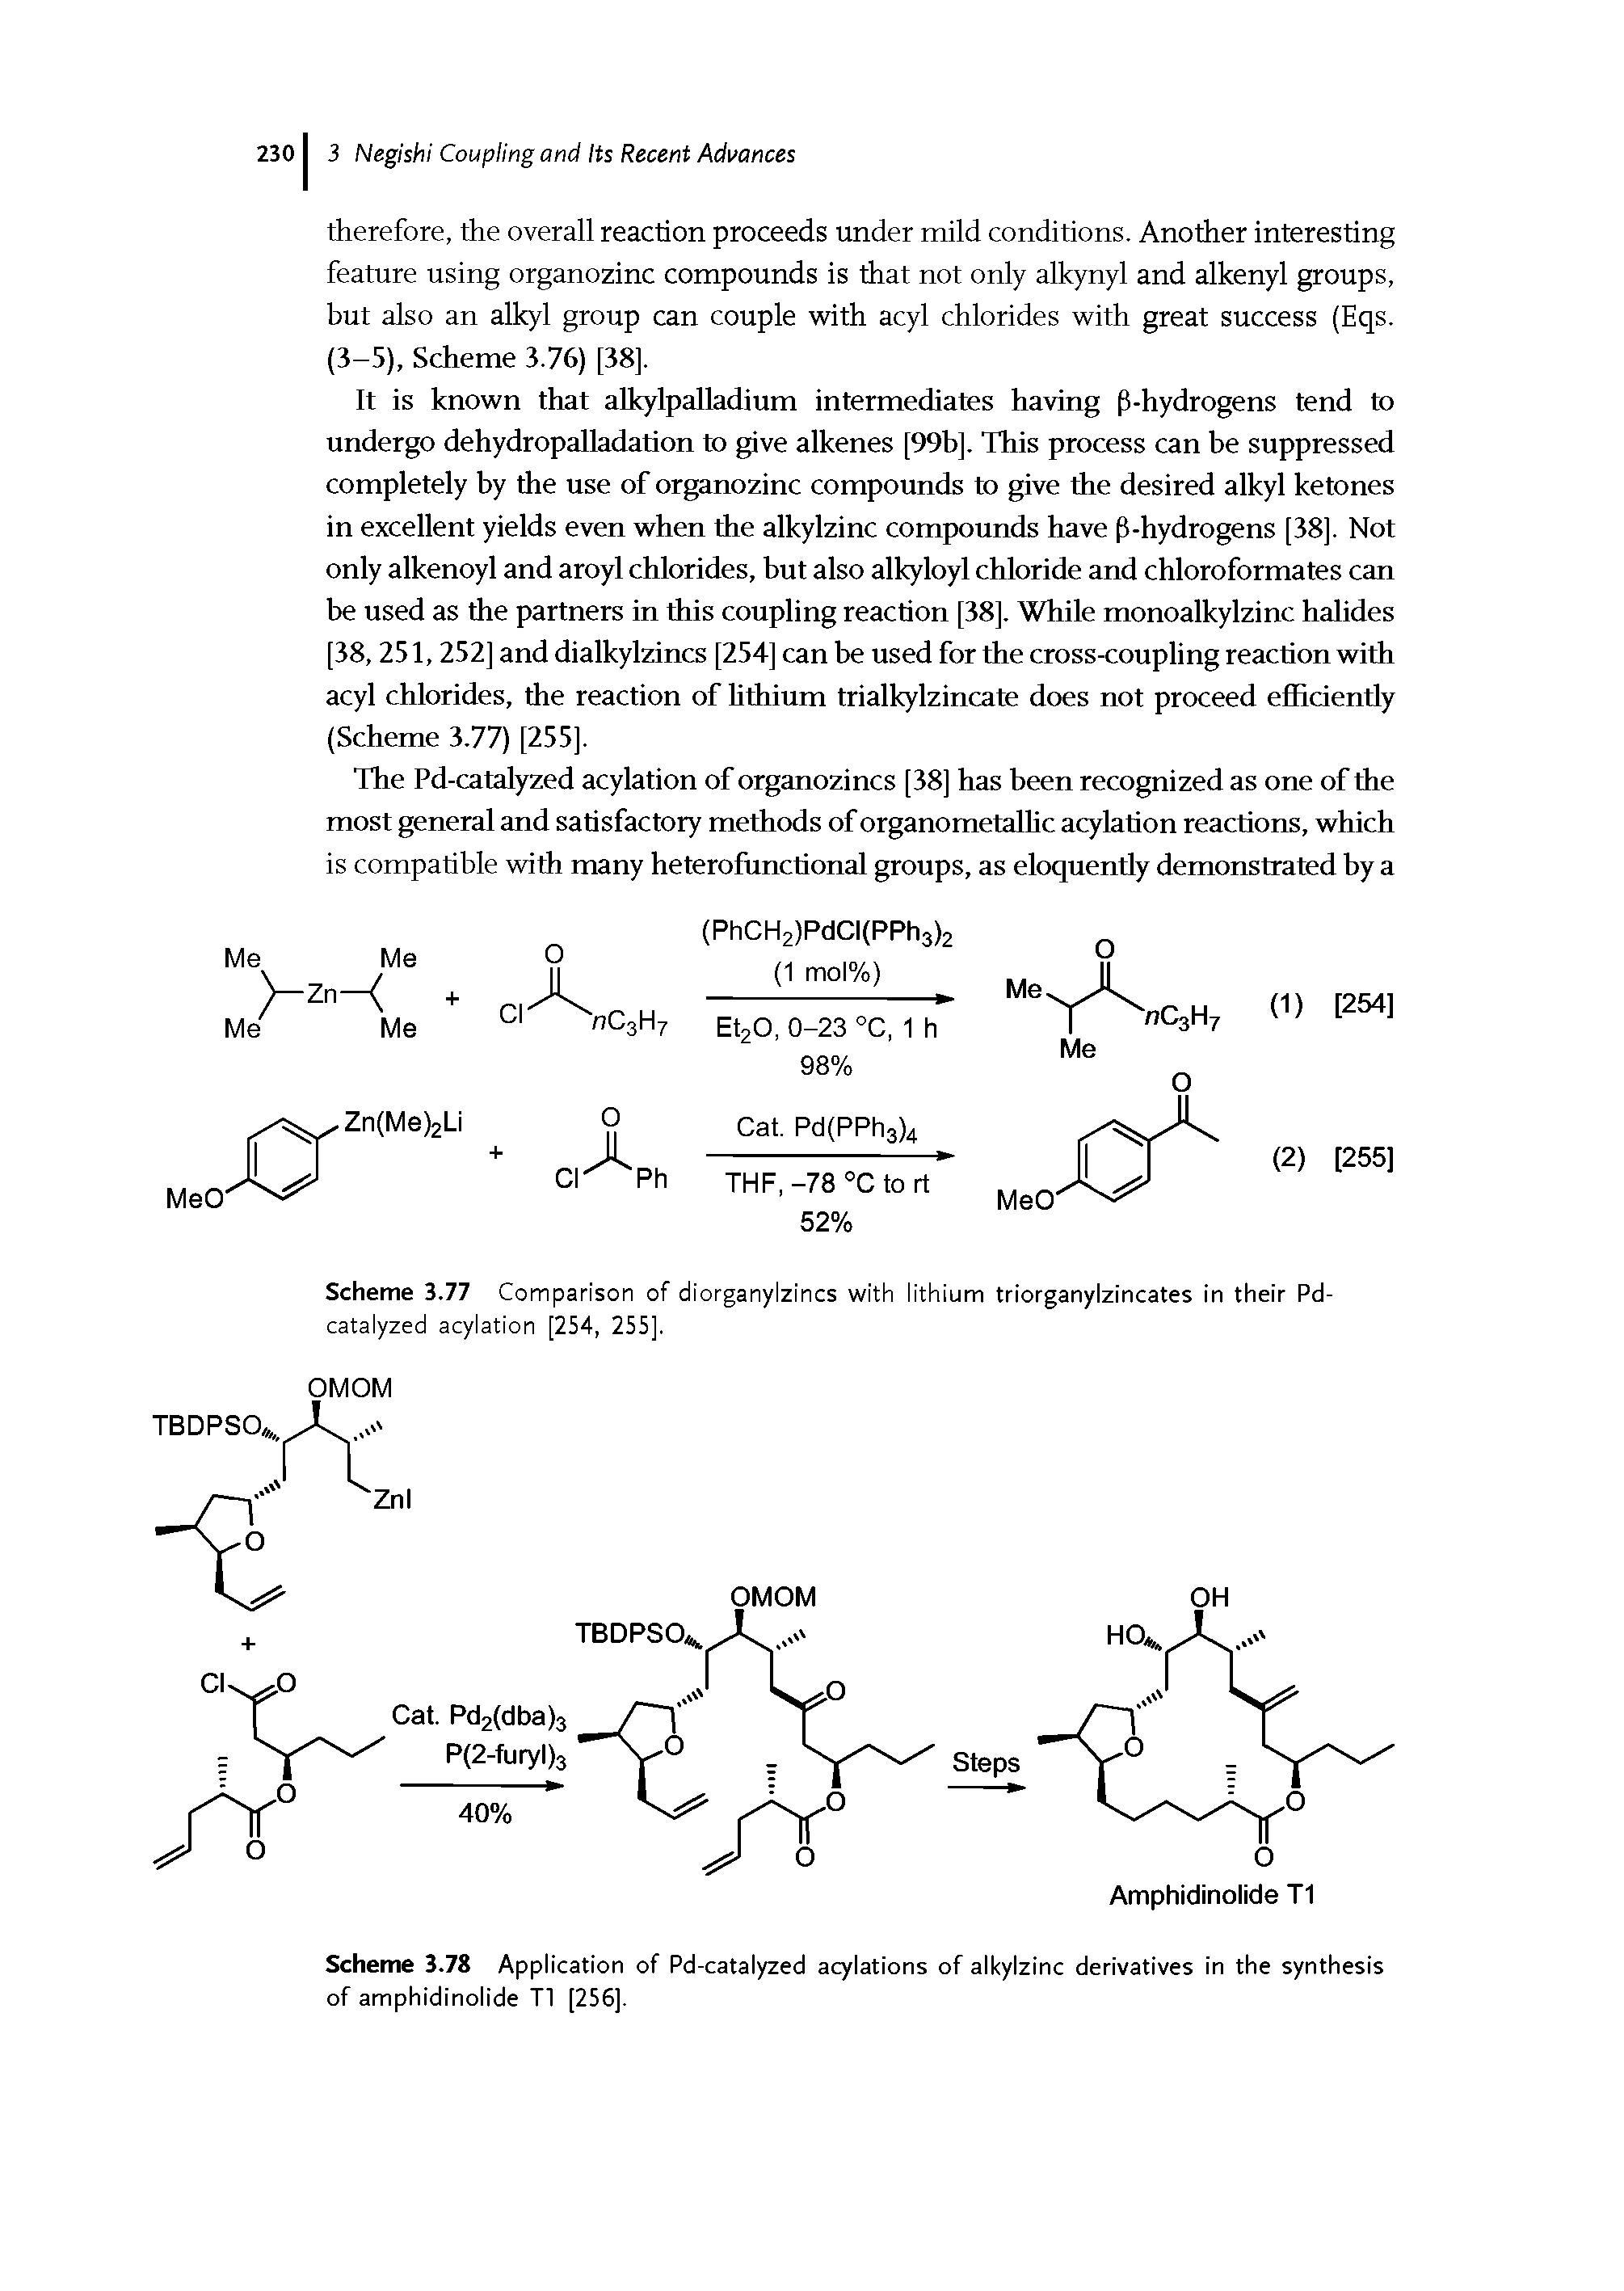 Scheme 3.78 Application of Pd-catalyzed acylations of alkylzinc derivatives in the synthesis of amphidinolide T1 [256].